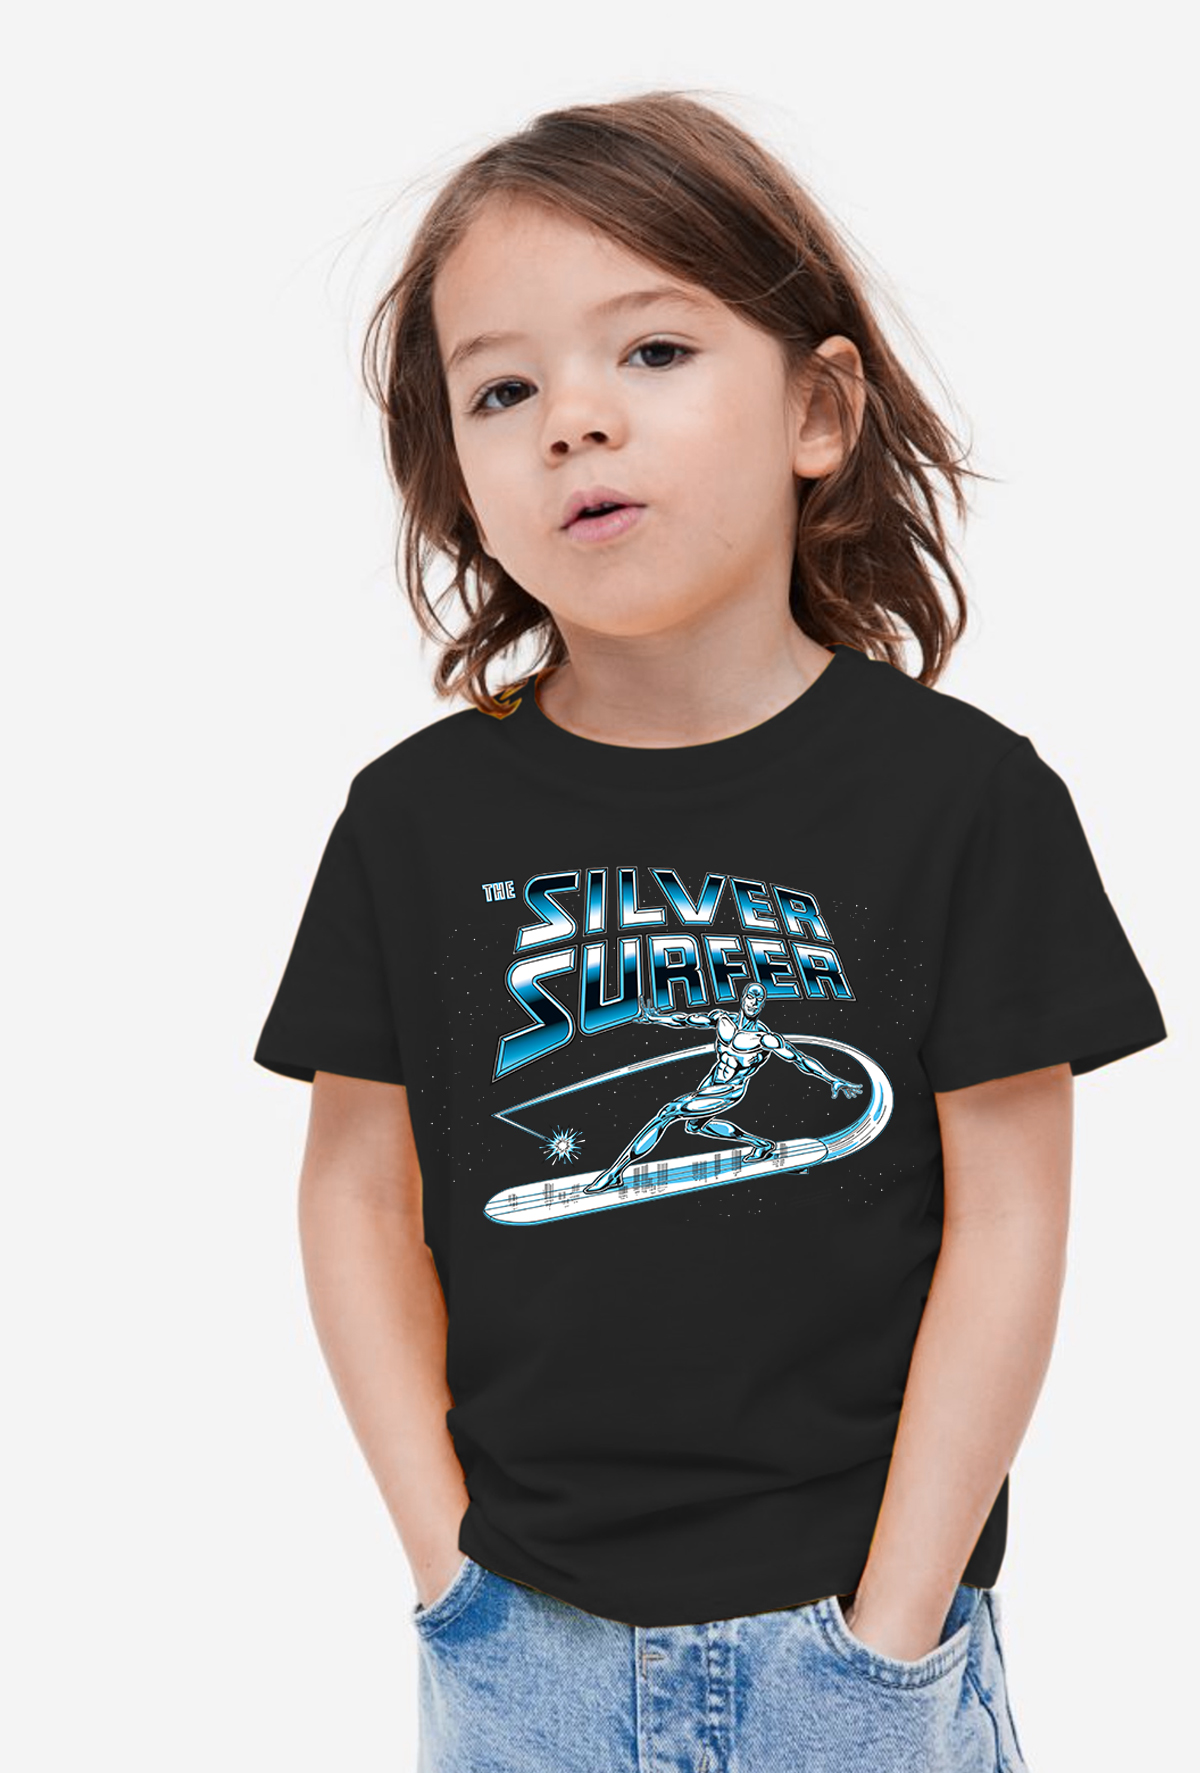 Kind in T-Shirt Silversurfer